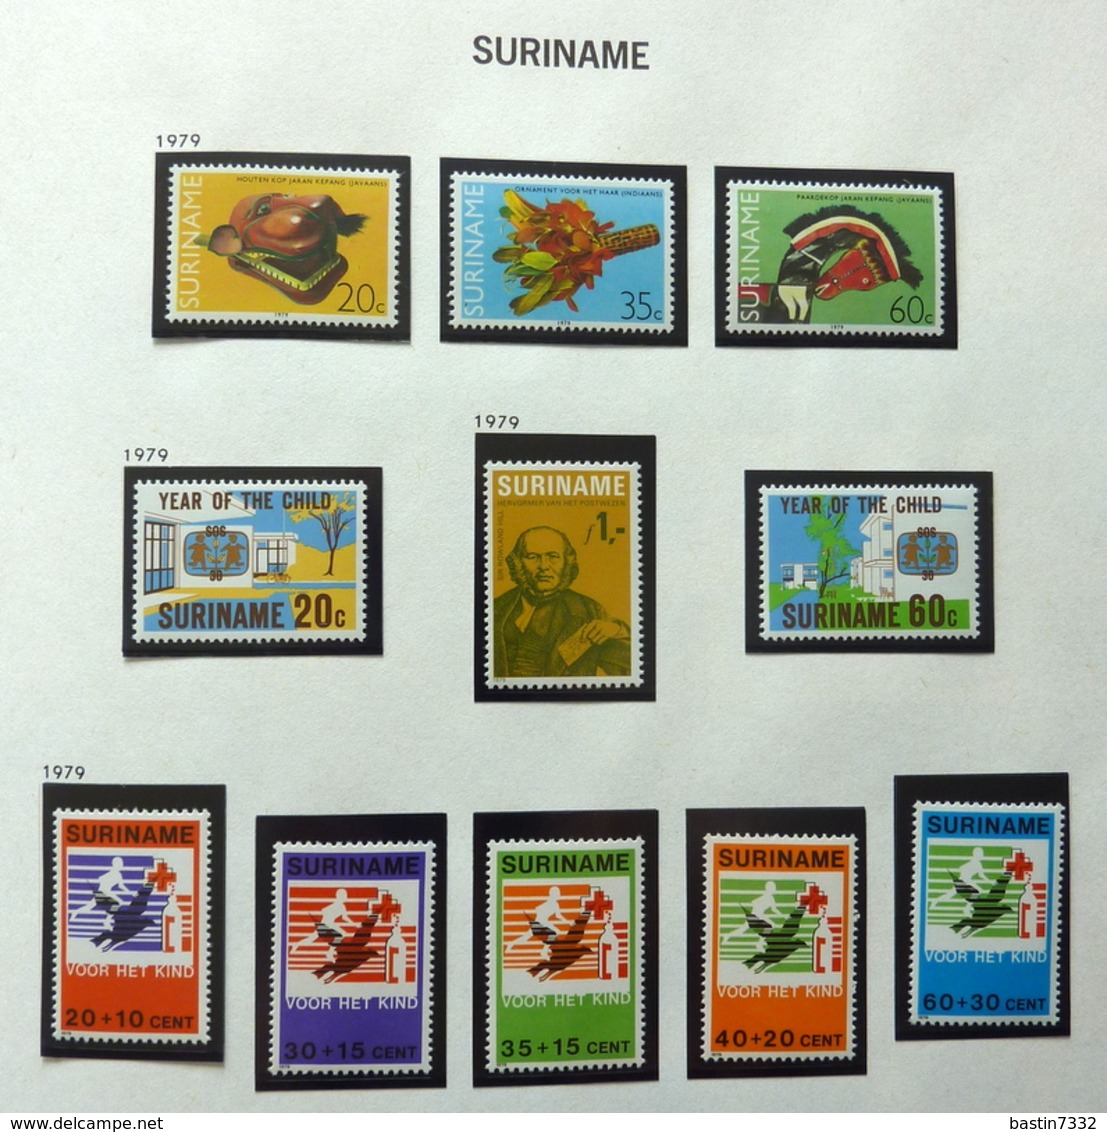 Suriname/Netherlands Indië/Curacao collection in Davo album